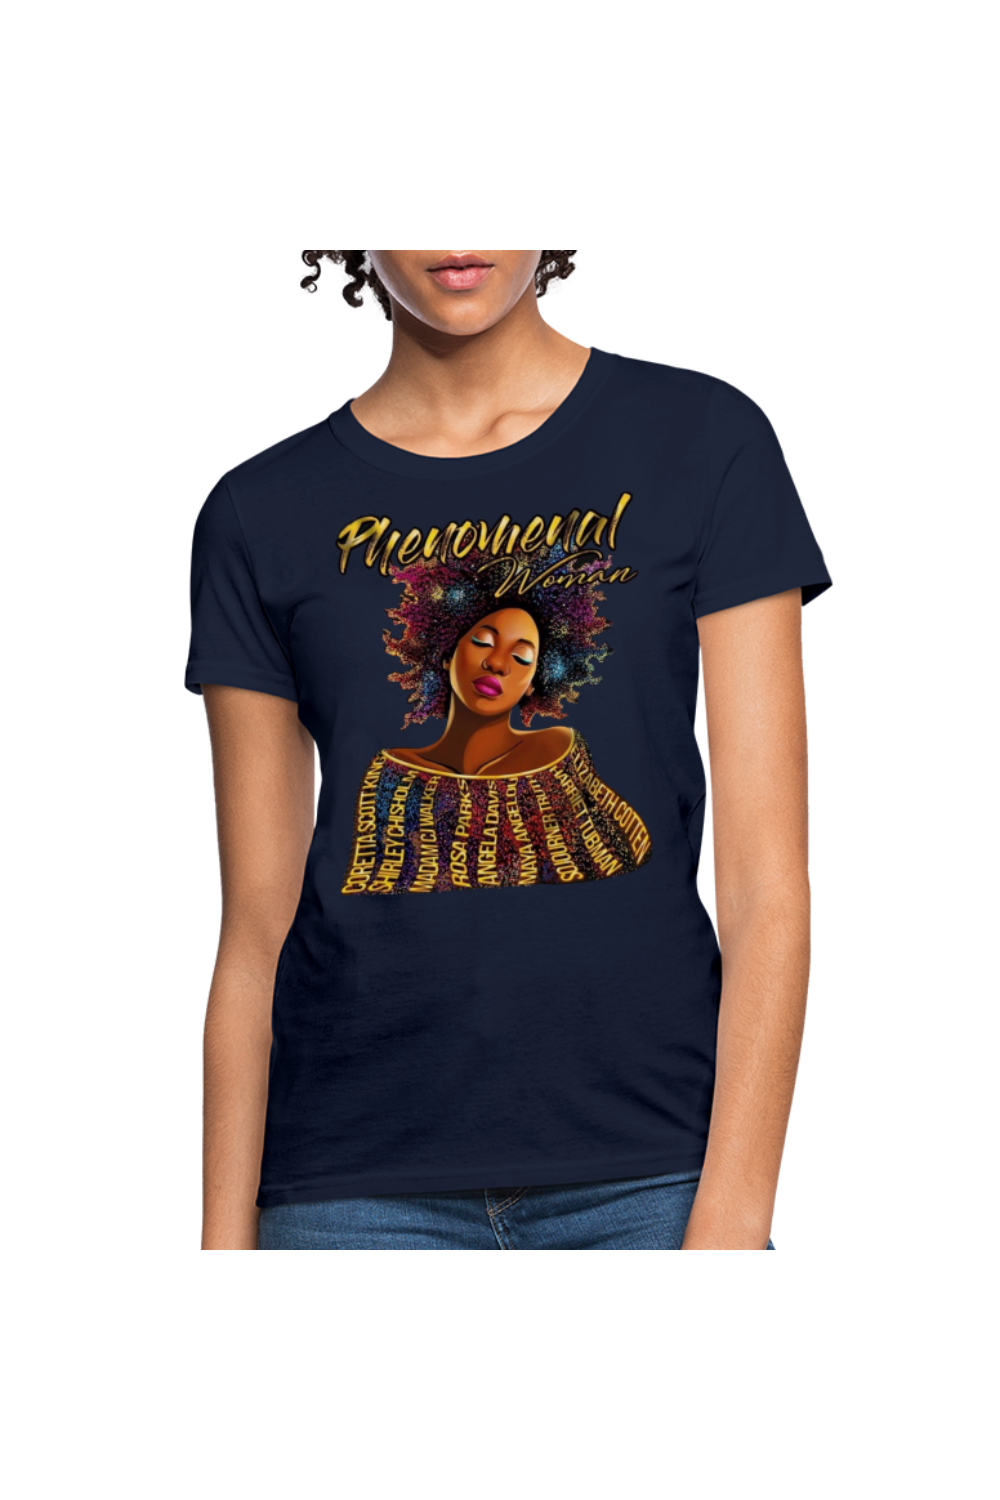 African American Women's Phenomenal Woman Short Sleeve T-Shirt - navy